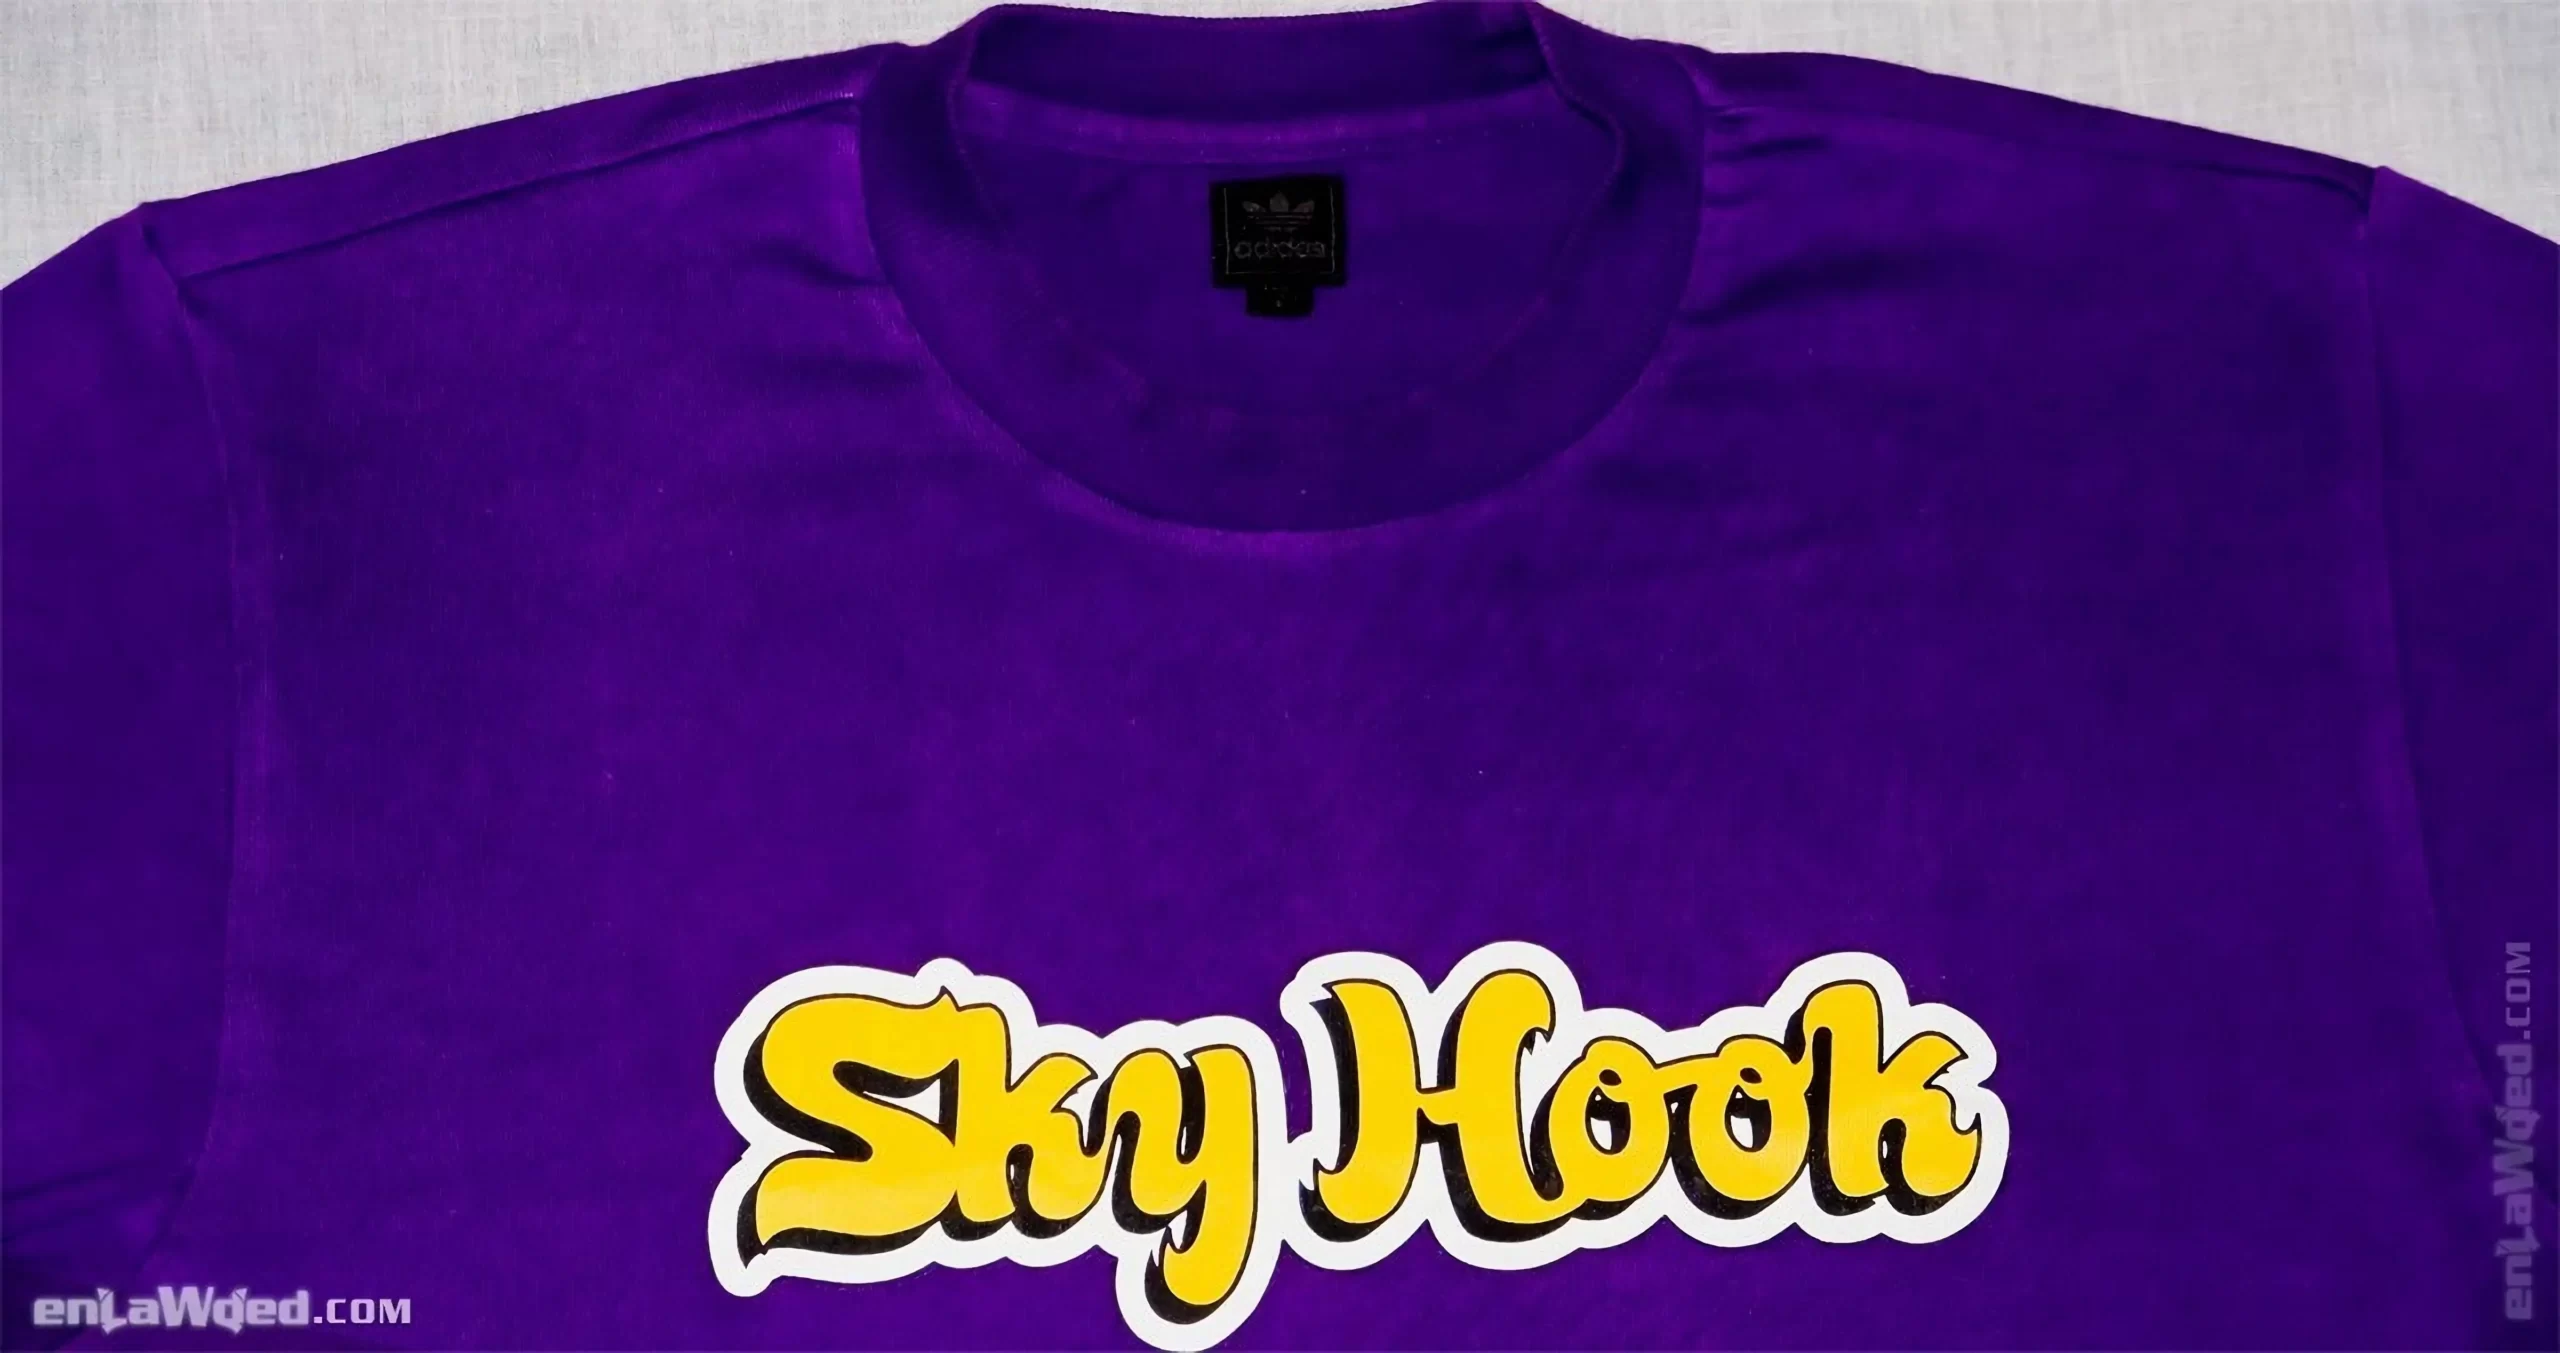 Men’s 2004 SkyHook Lakers #33 T-Shirt by Adidas: Unburdened (EnLawded.com file #lmchk90352ip2y124412kg9st)